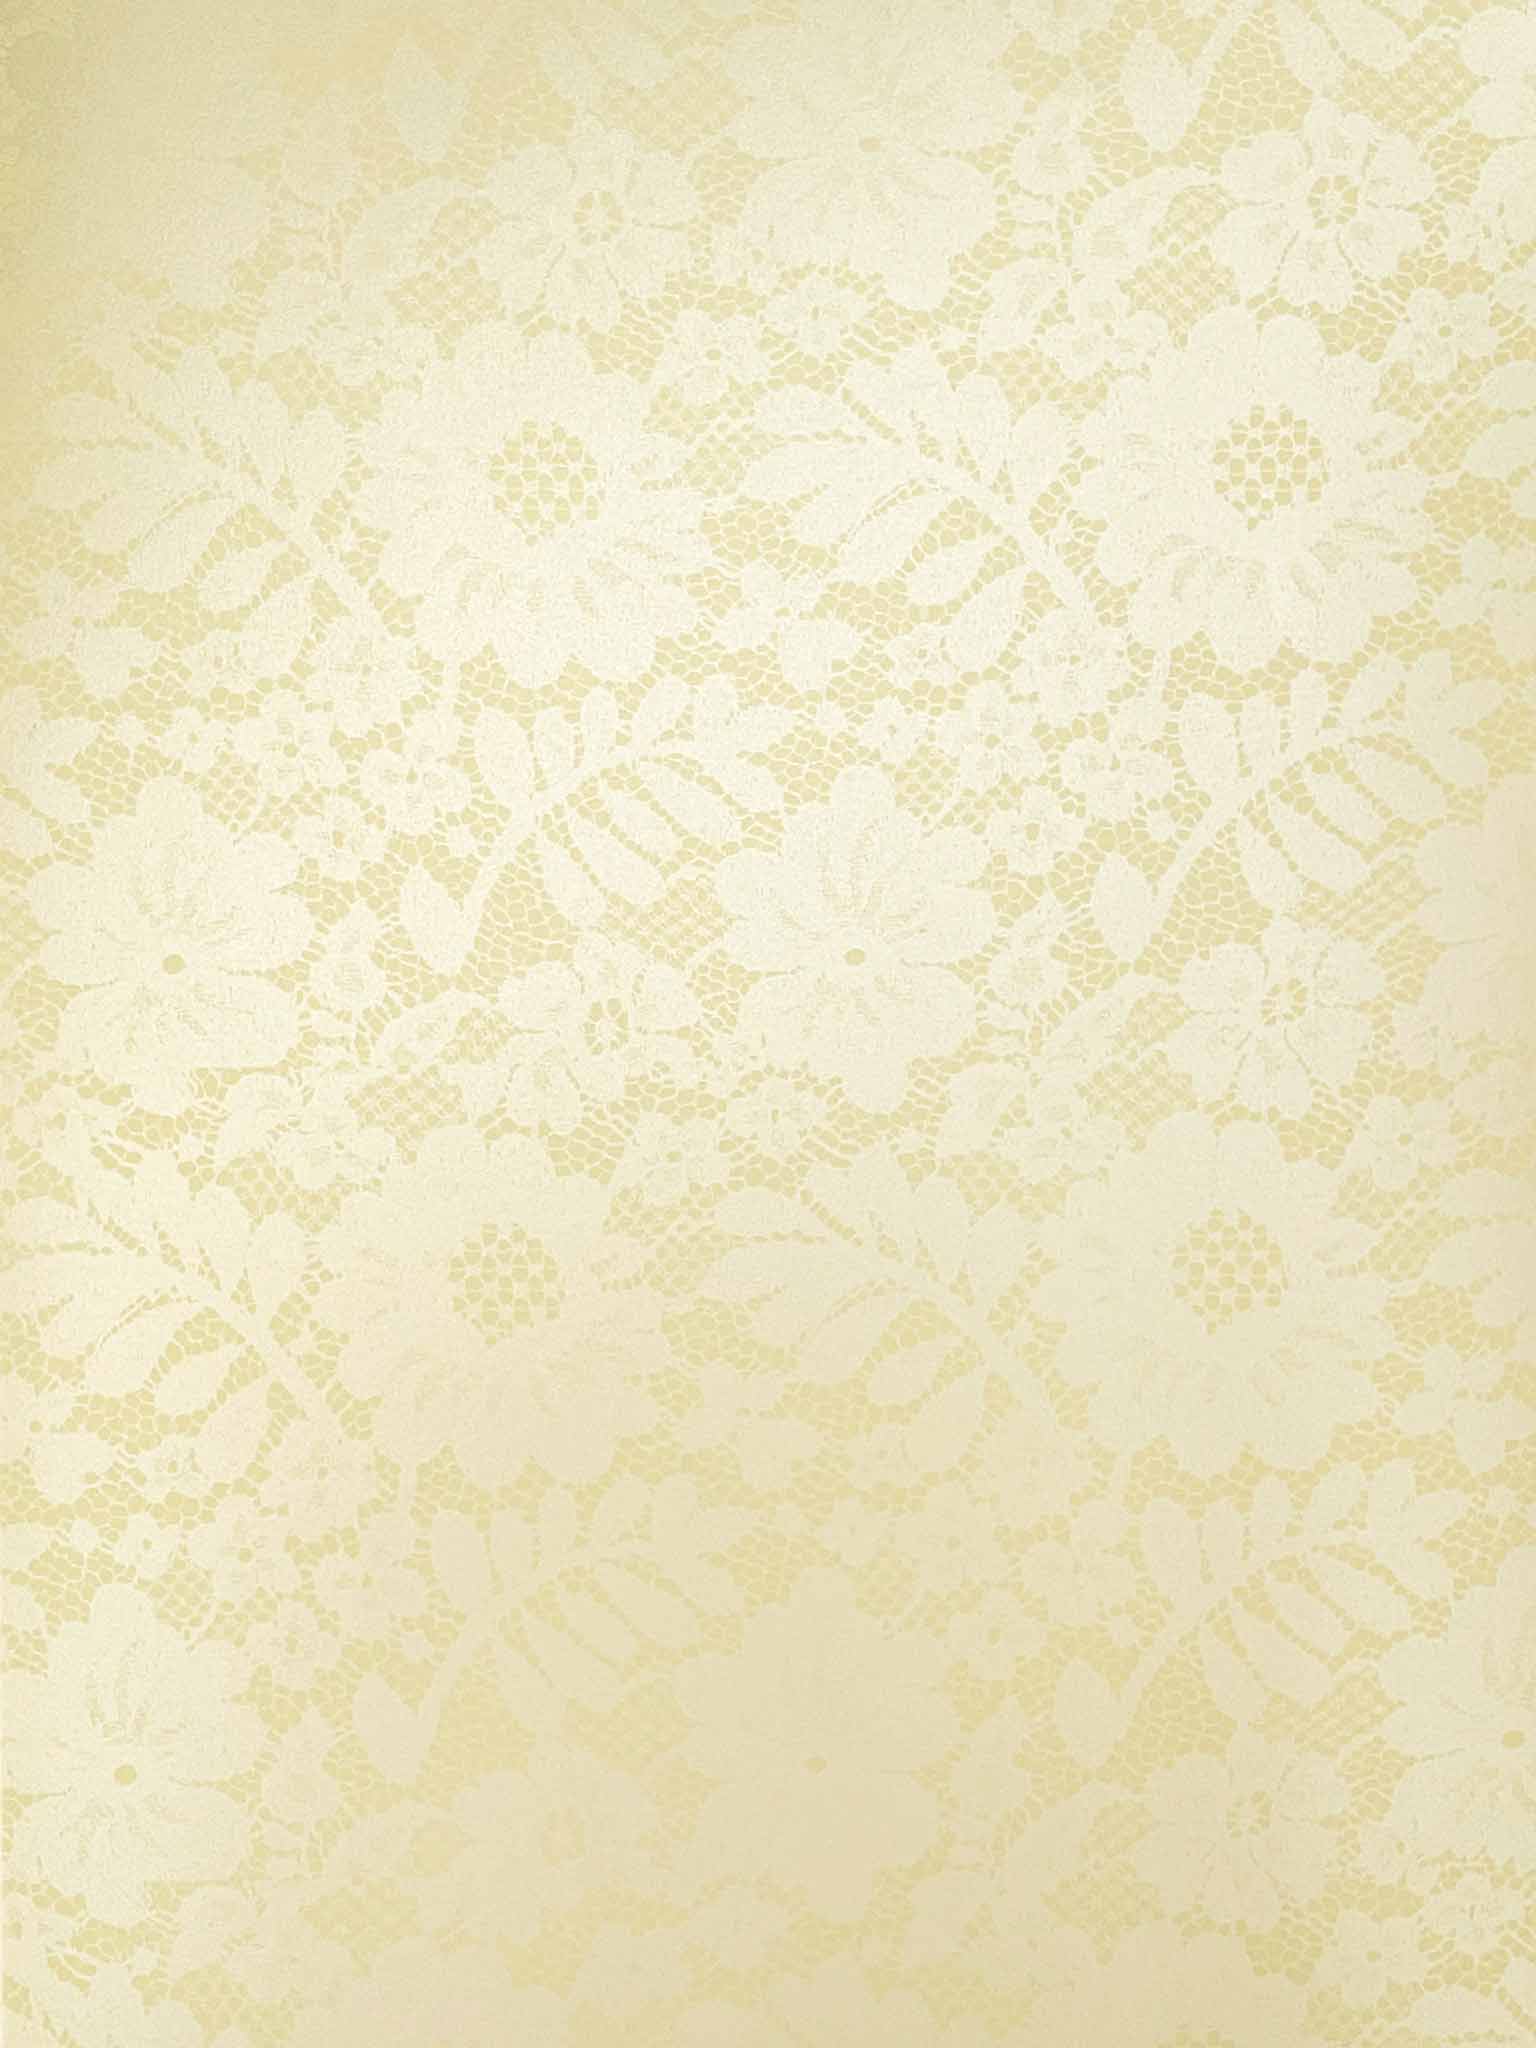 Chantilly Lace Paper in Light Cream  ImagineDIY   